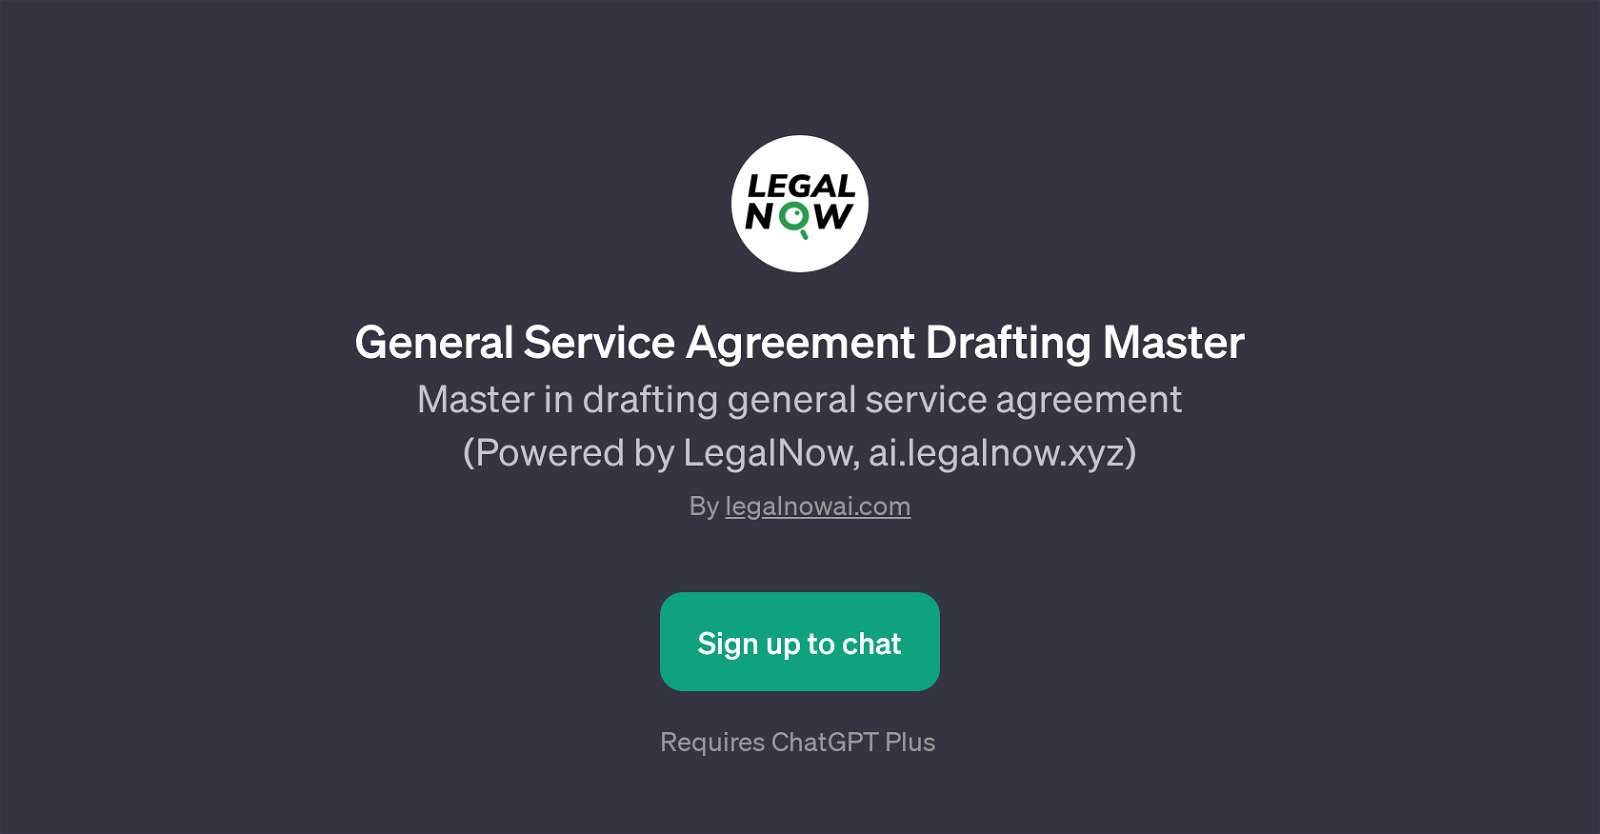 General Service Agreement Drafting Master website